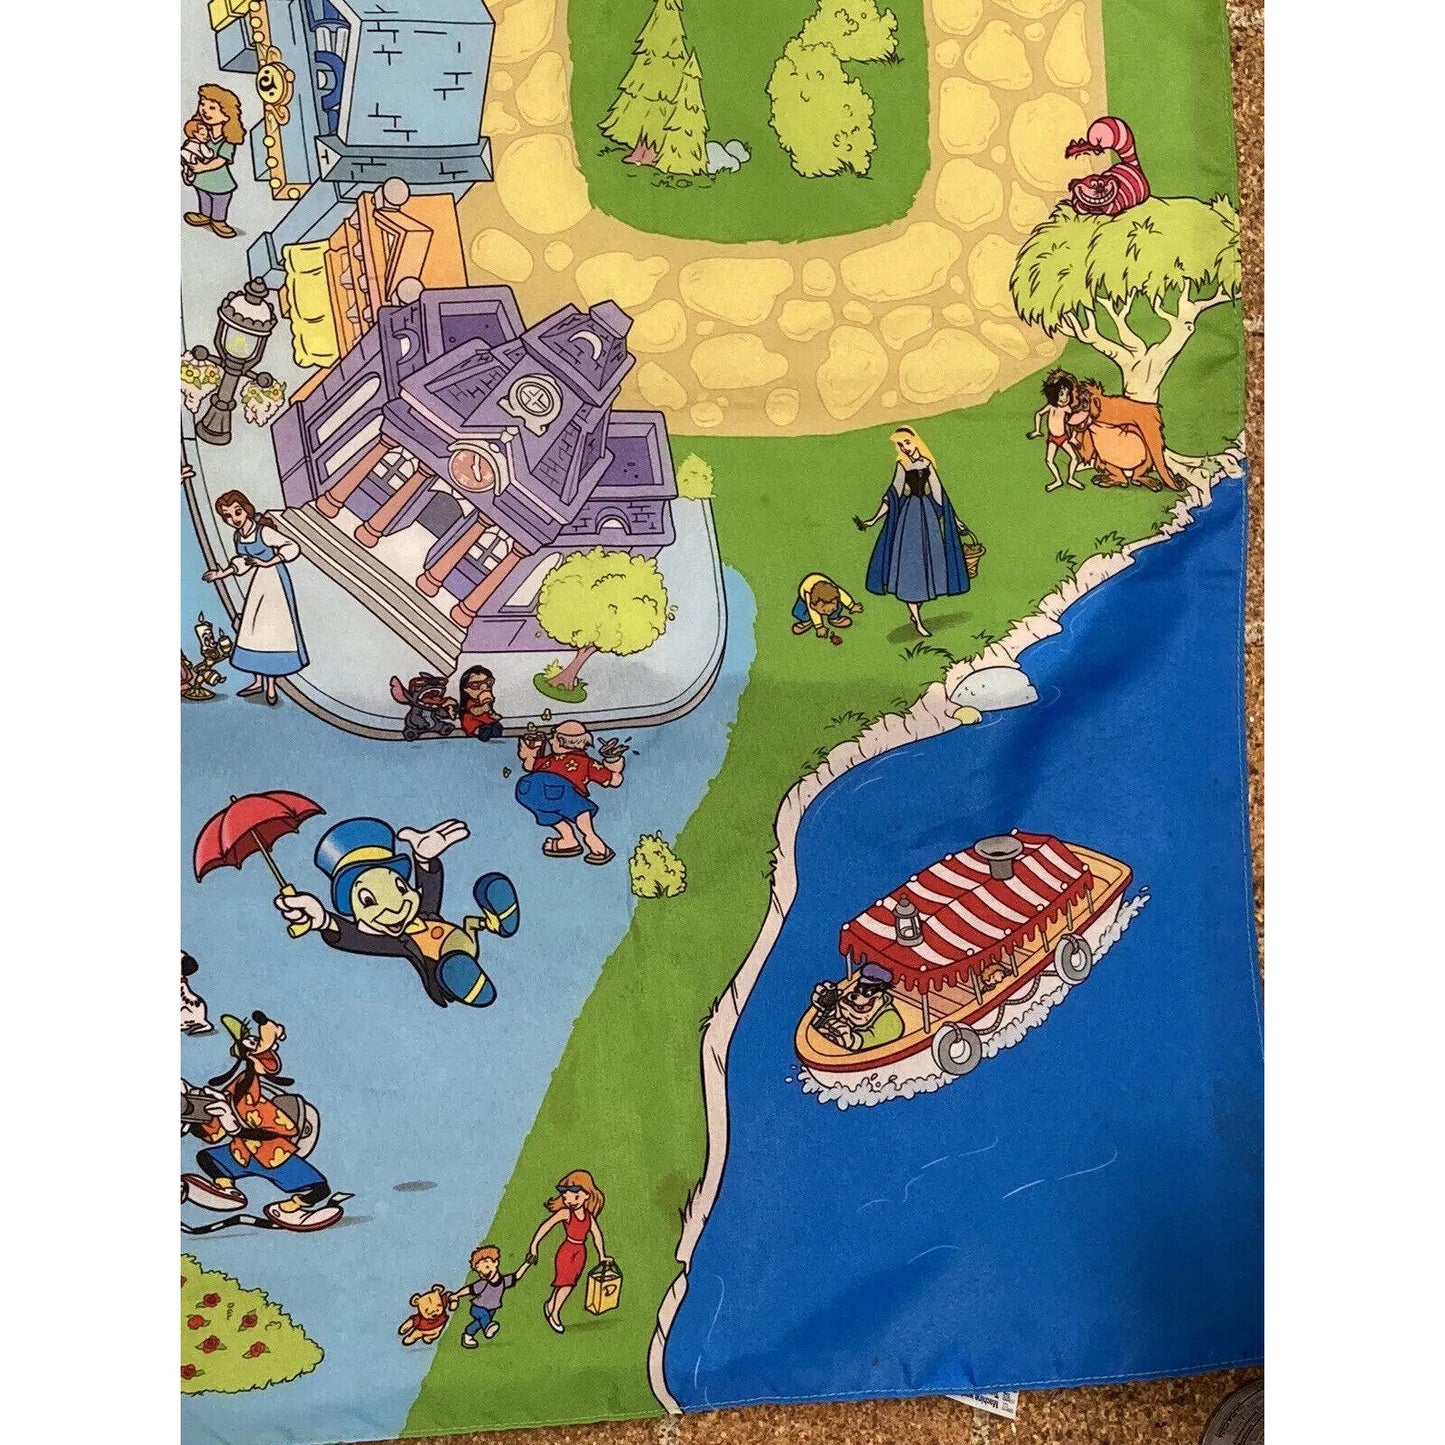 Disney Theme Parks Play Mat #6917 2003 Hasbro Wall Decor Poster Flag 36x56"